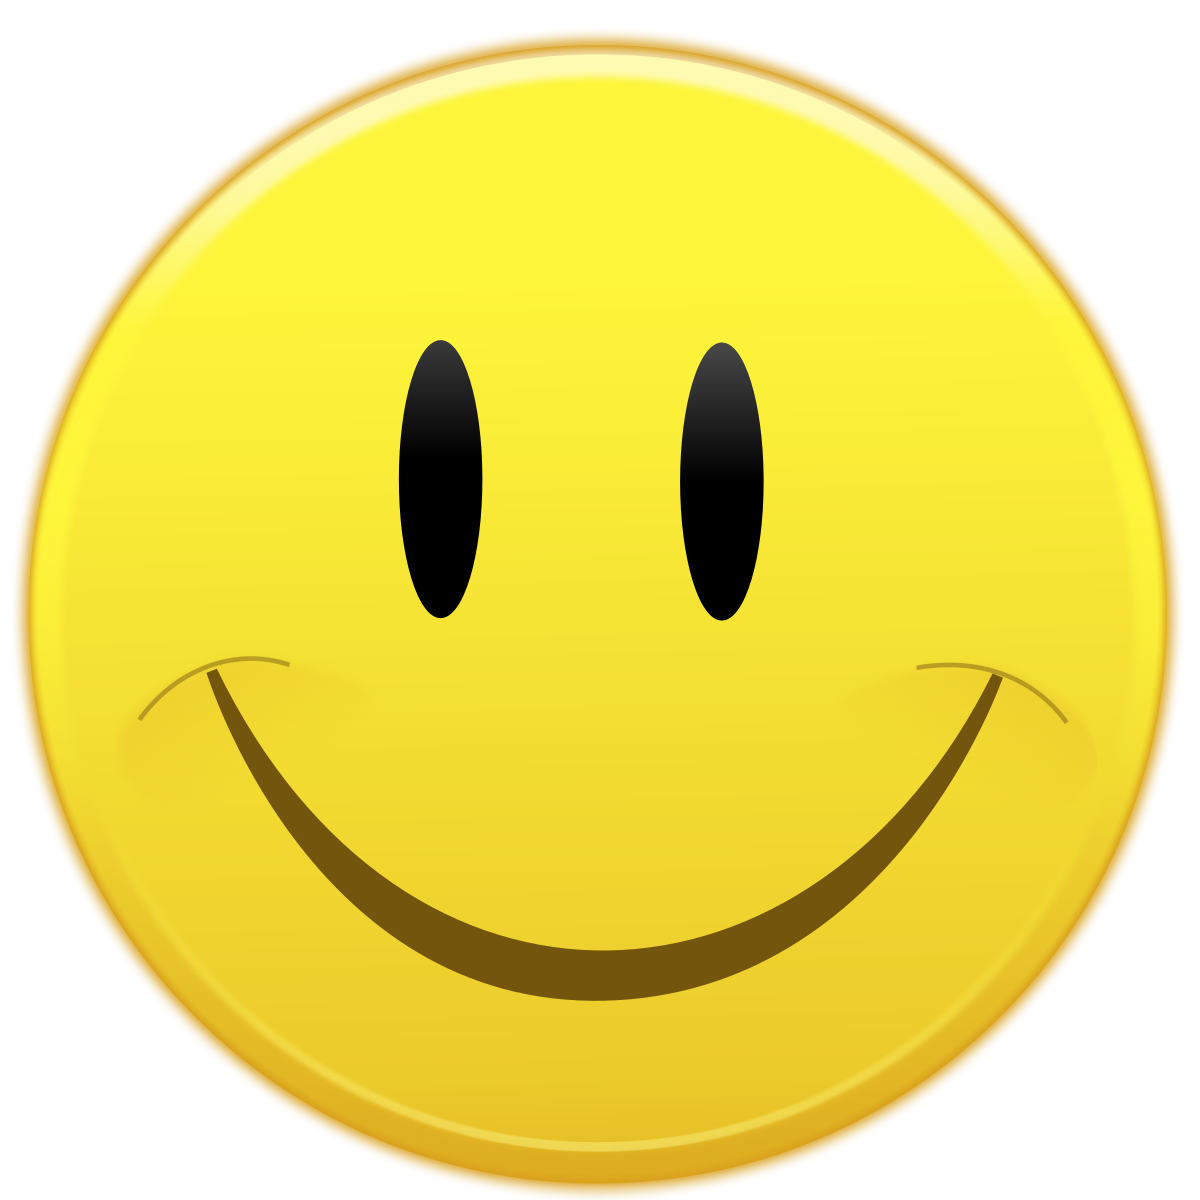 A smiling face emoji.